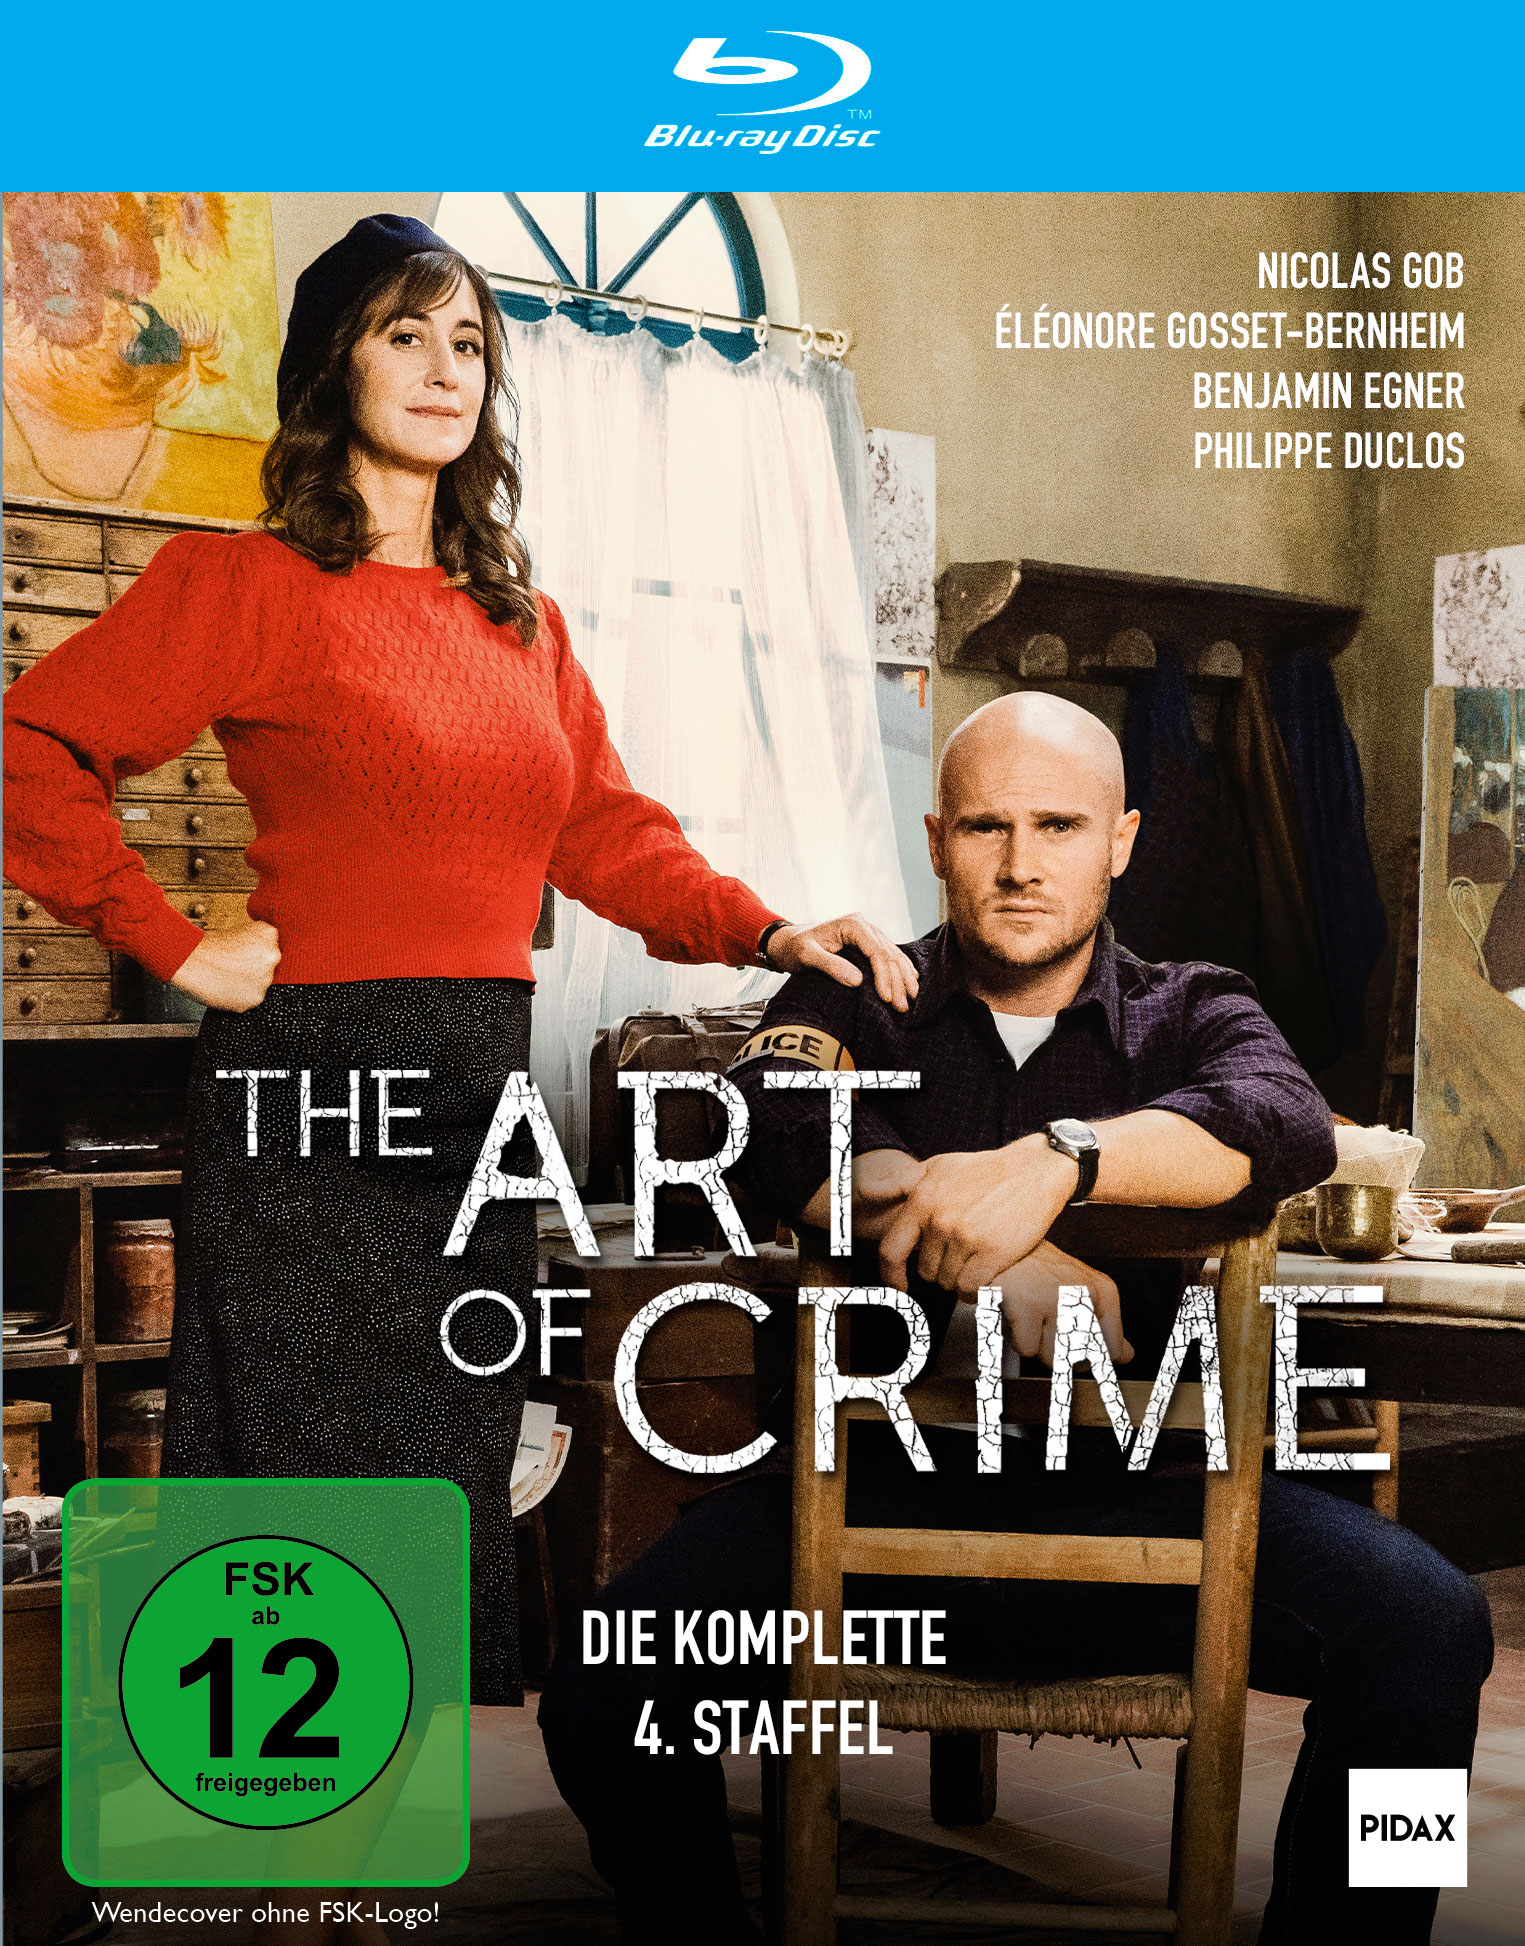 The Art of Crime, Staffel 4